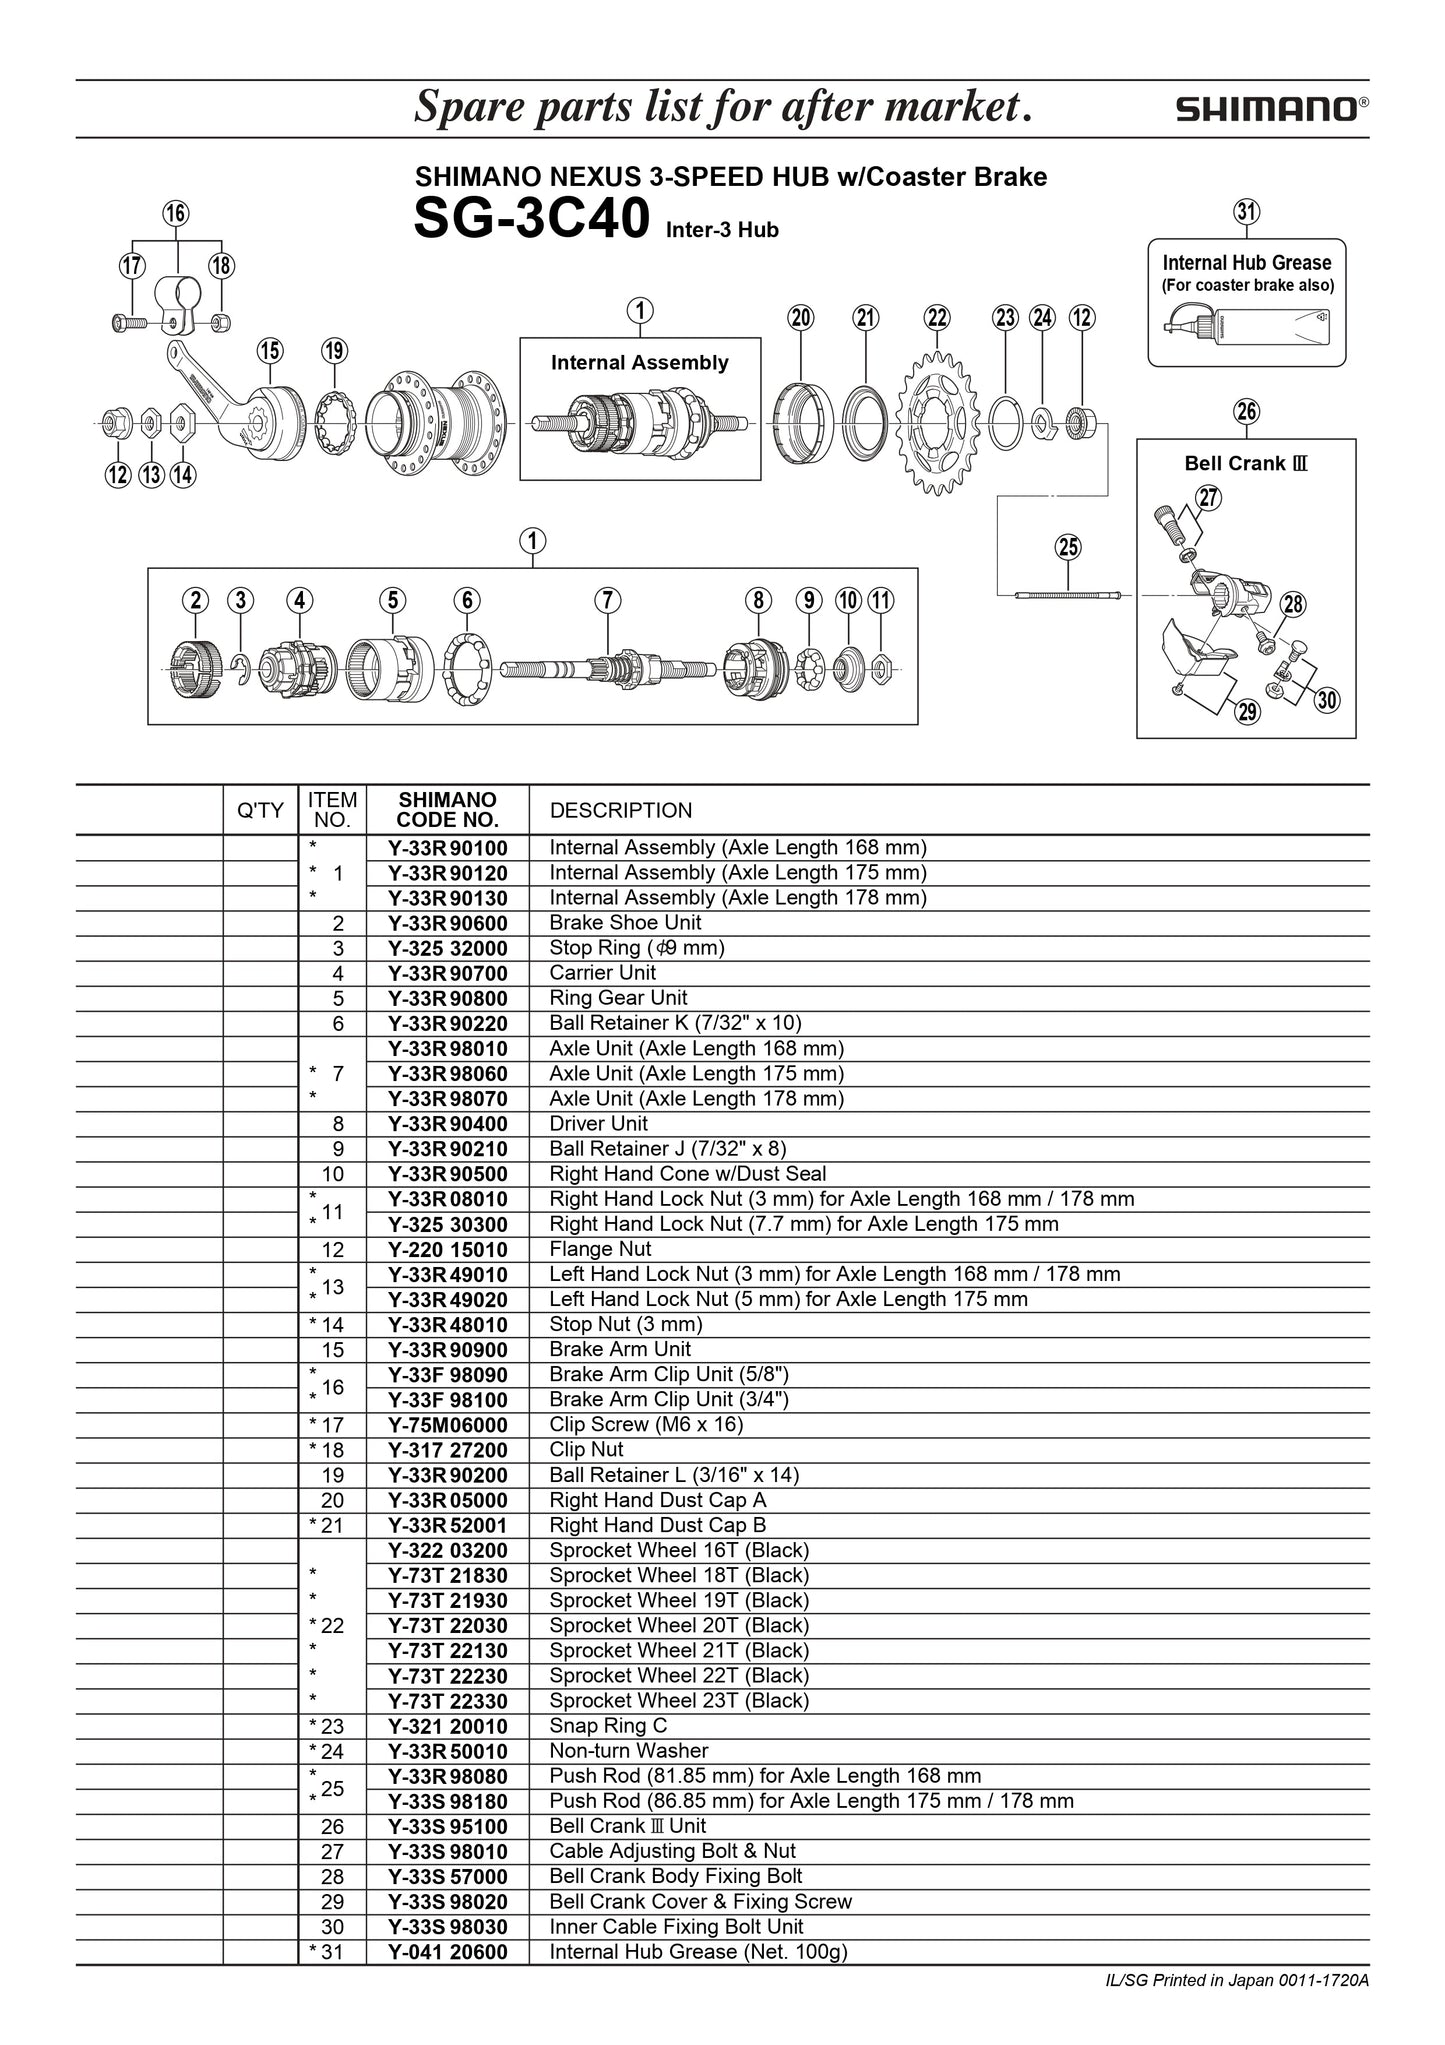 SHIMANO Nexus SG-3C40 Hub 3-Speed Right Hand Dust Cap B - Y33R52001-Pit Crew Cycles